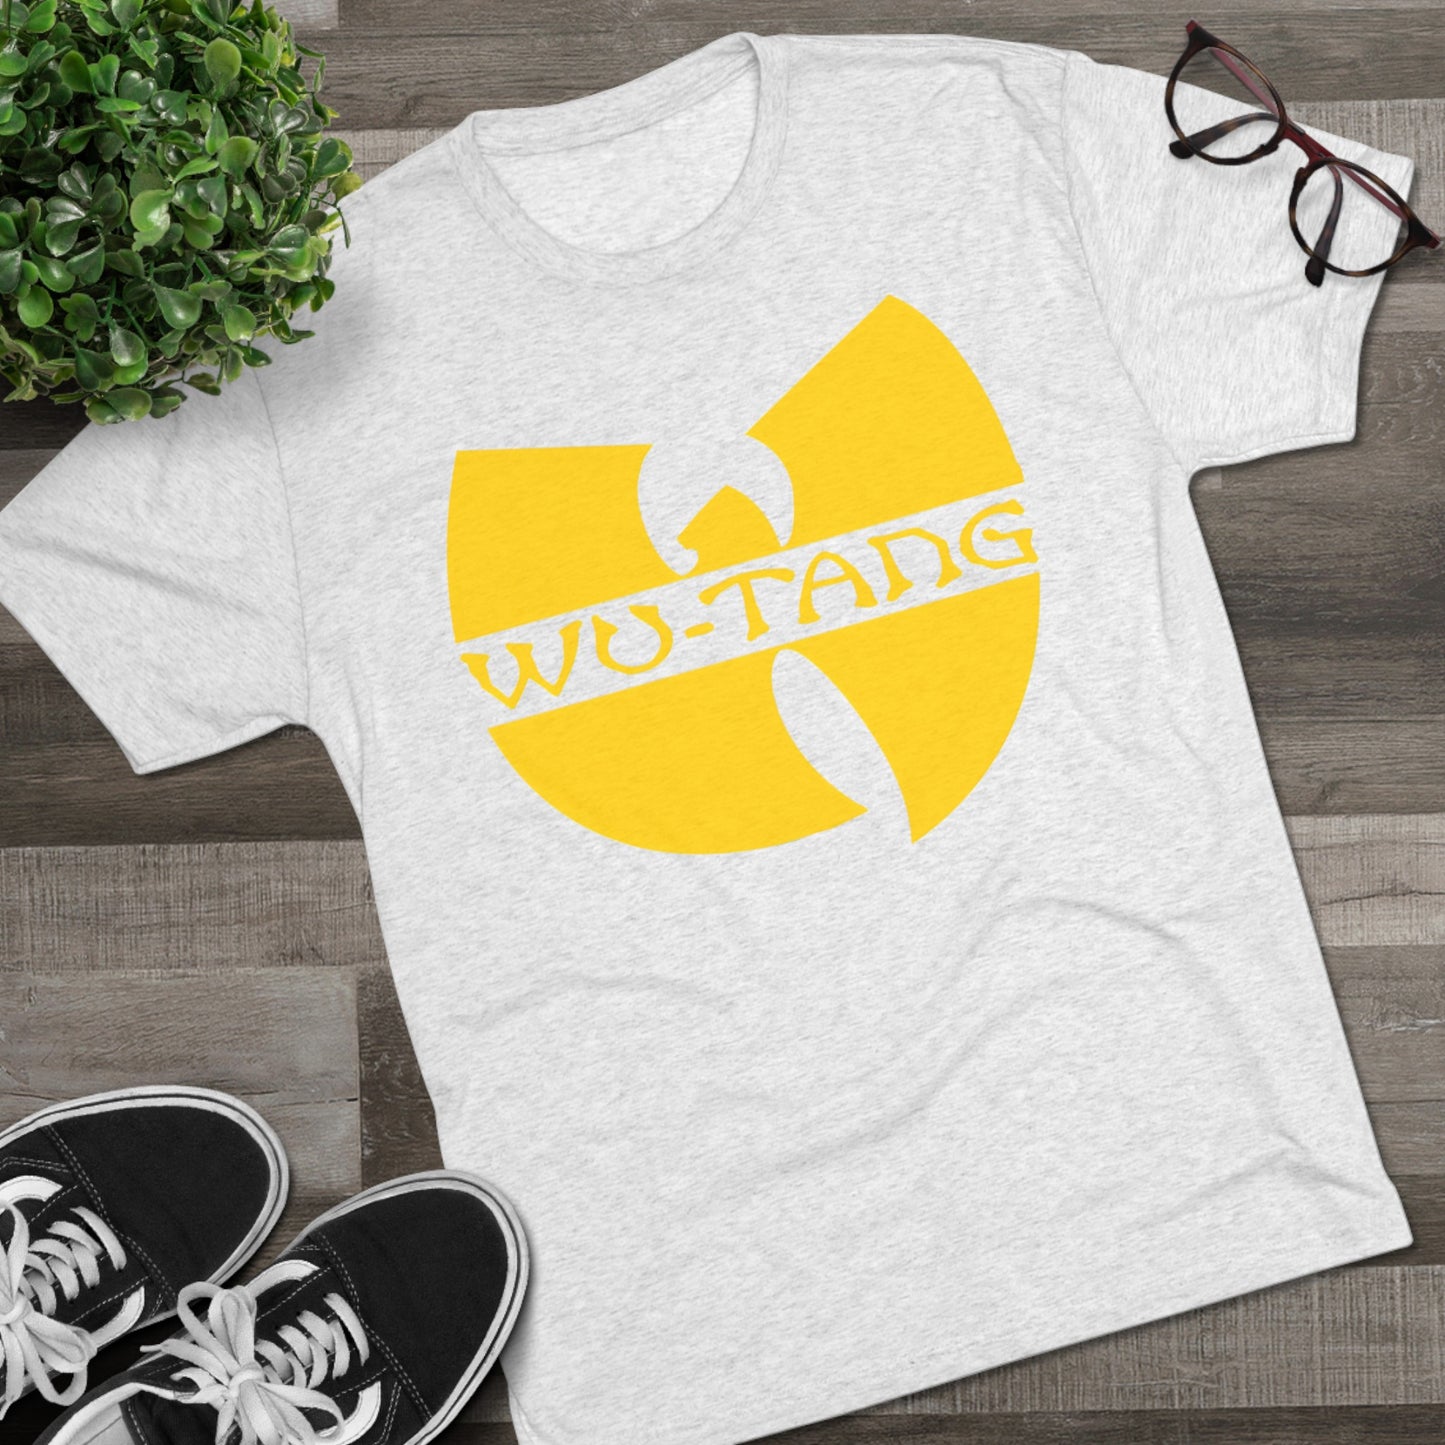 Wu-Tang Clan Inspired Tri-Blend T-Shirt - Ultra-Soft, Lightweight & Stylish